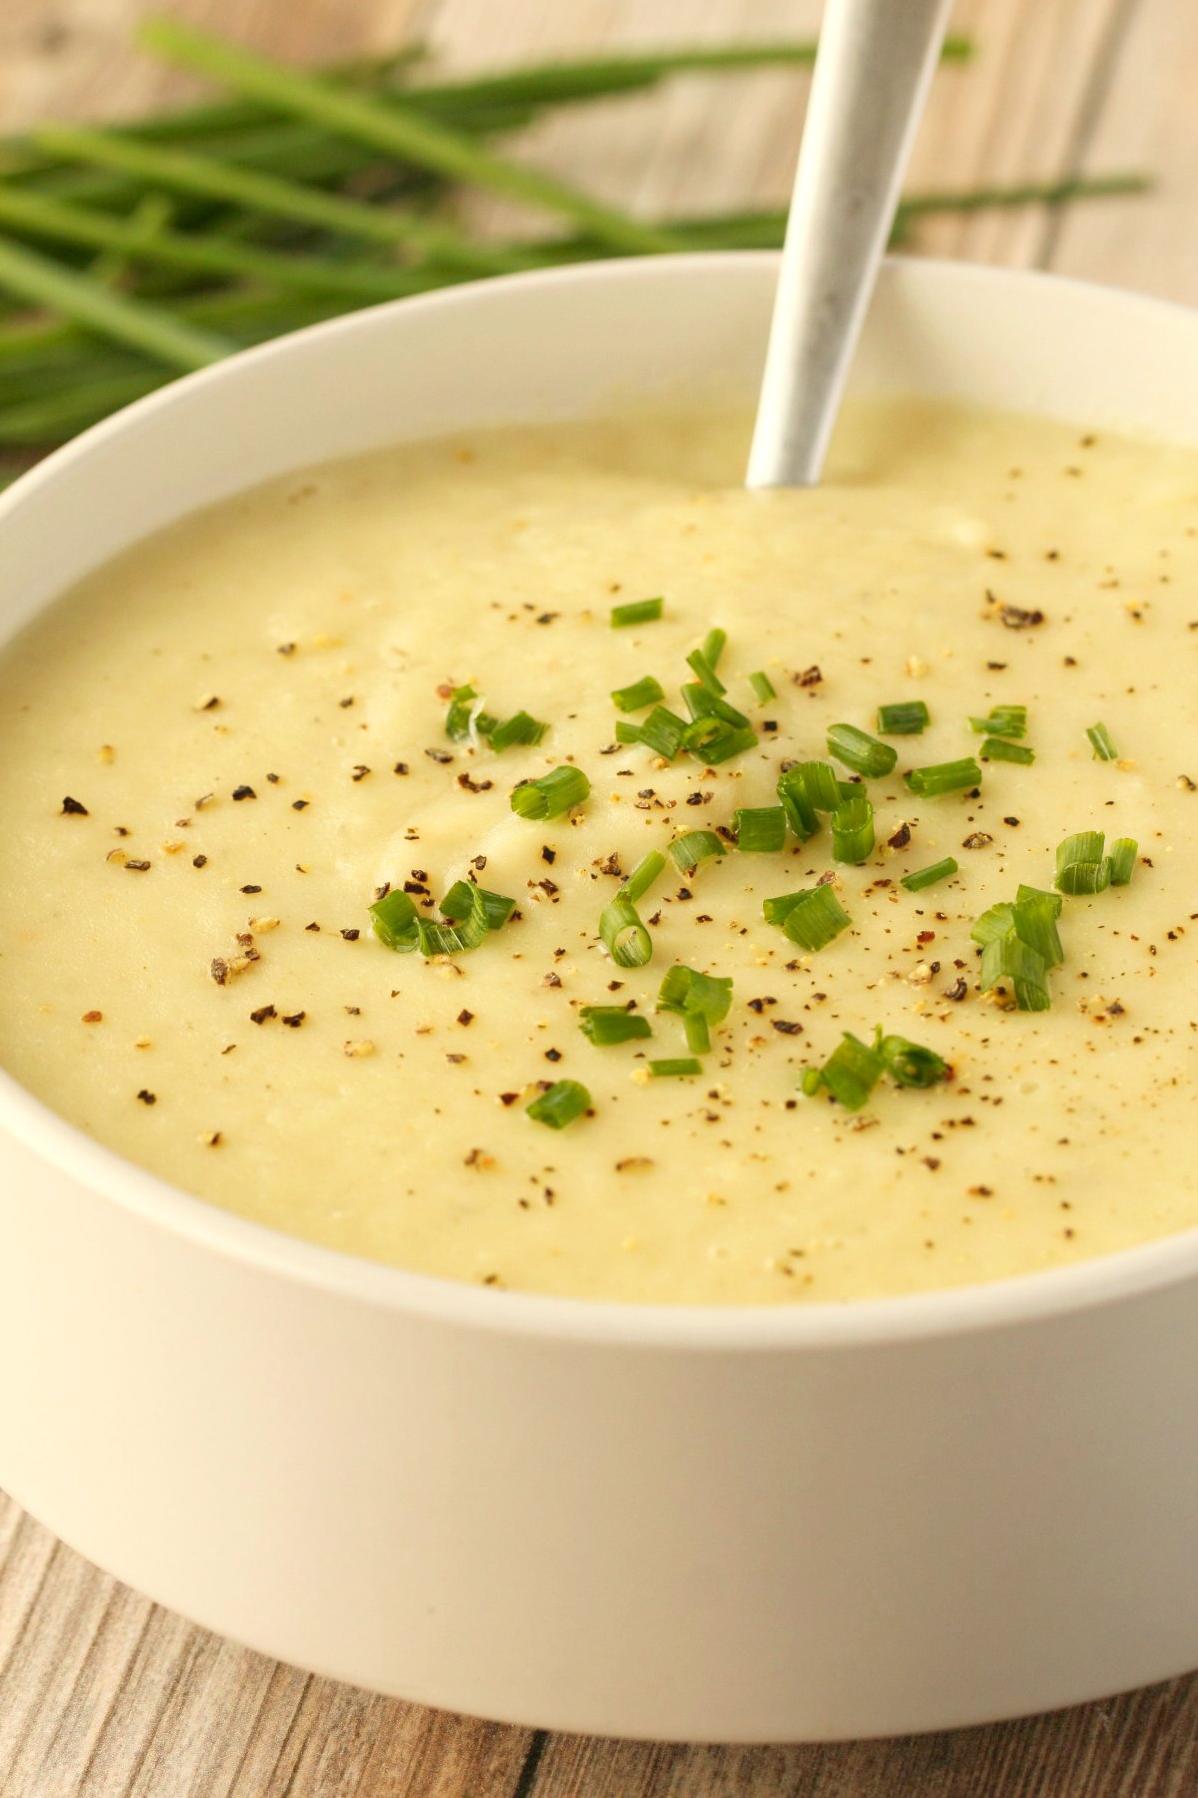  The creamiest leek soup you'll ever taste!